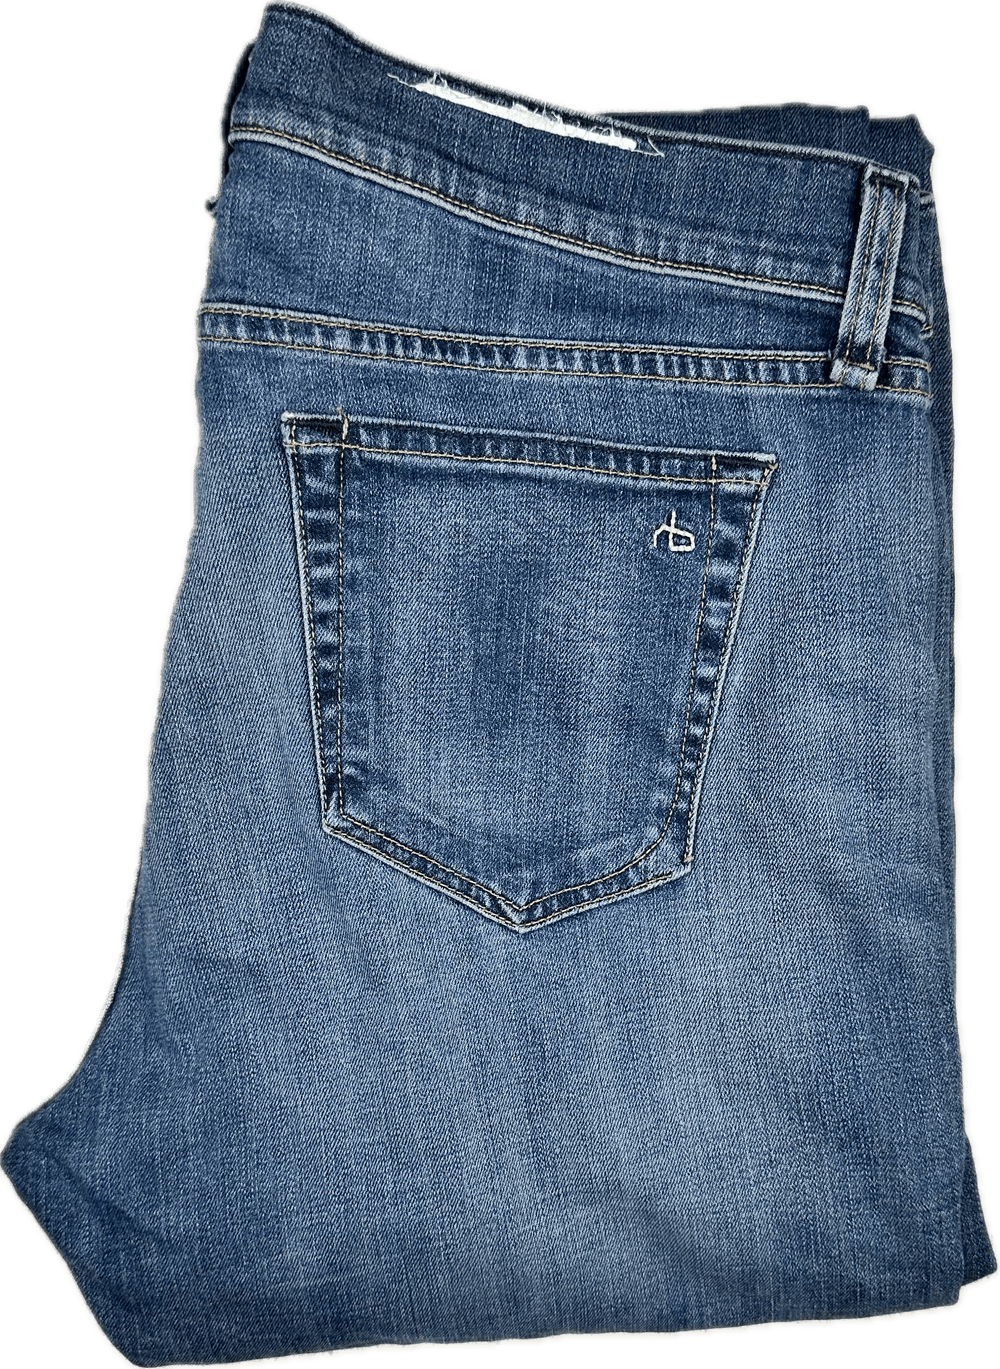 Rag & Bone Mens 'Fit 2' Indigo Rinse Jeans Made in USA - Size 36 - Jean Pool